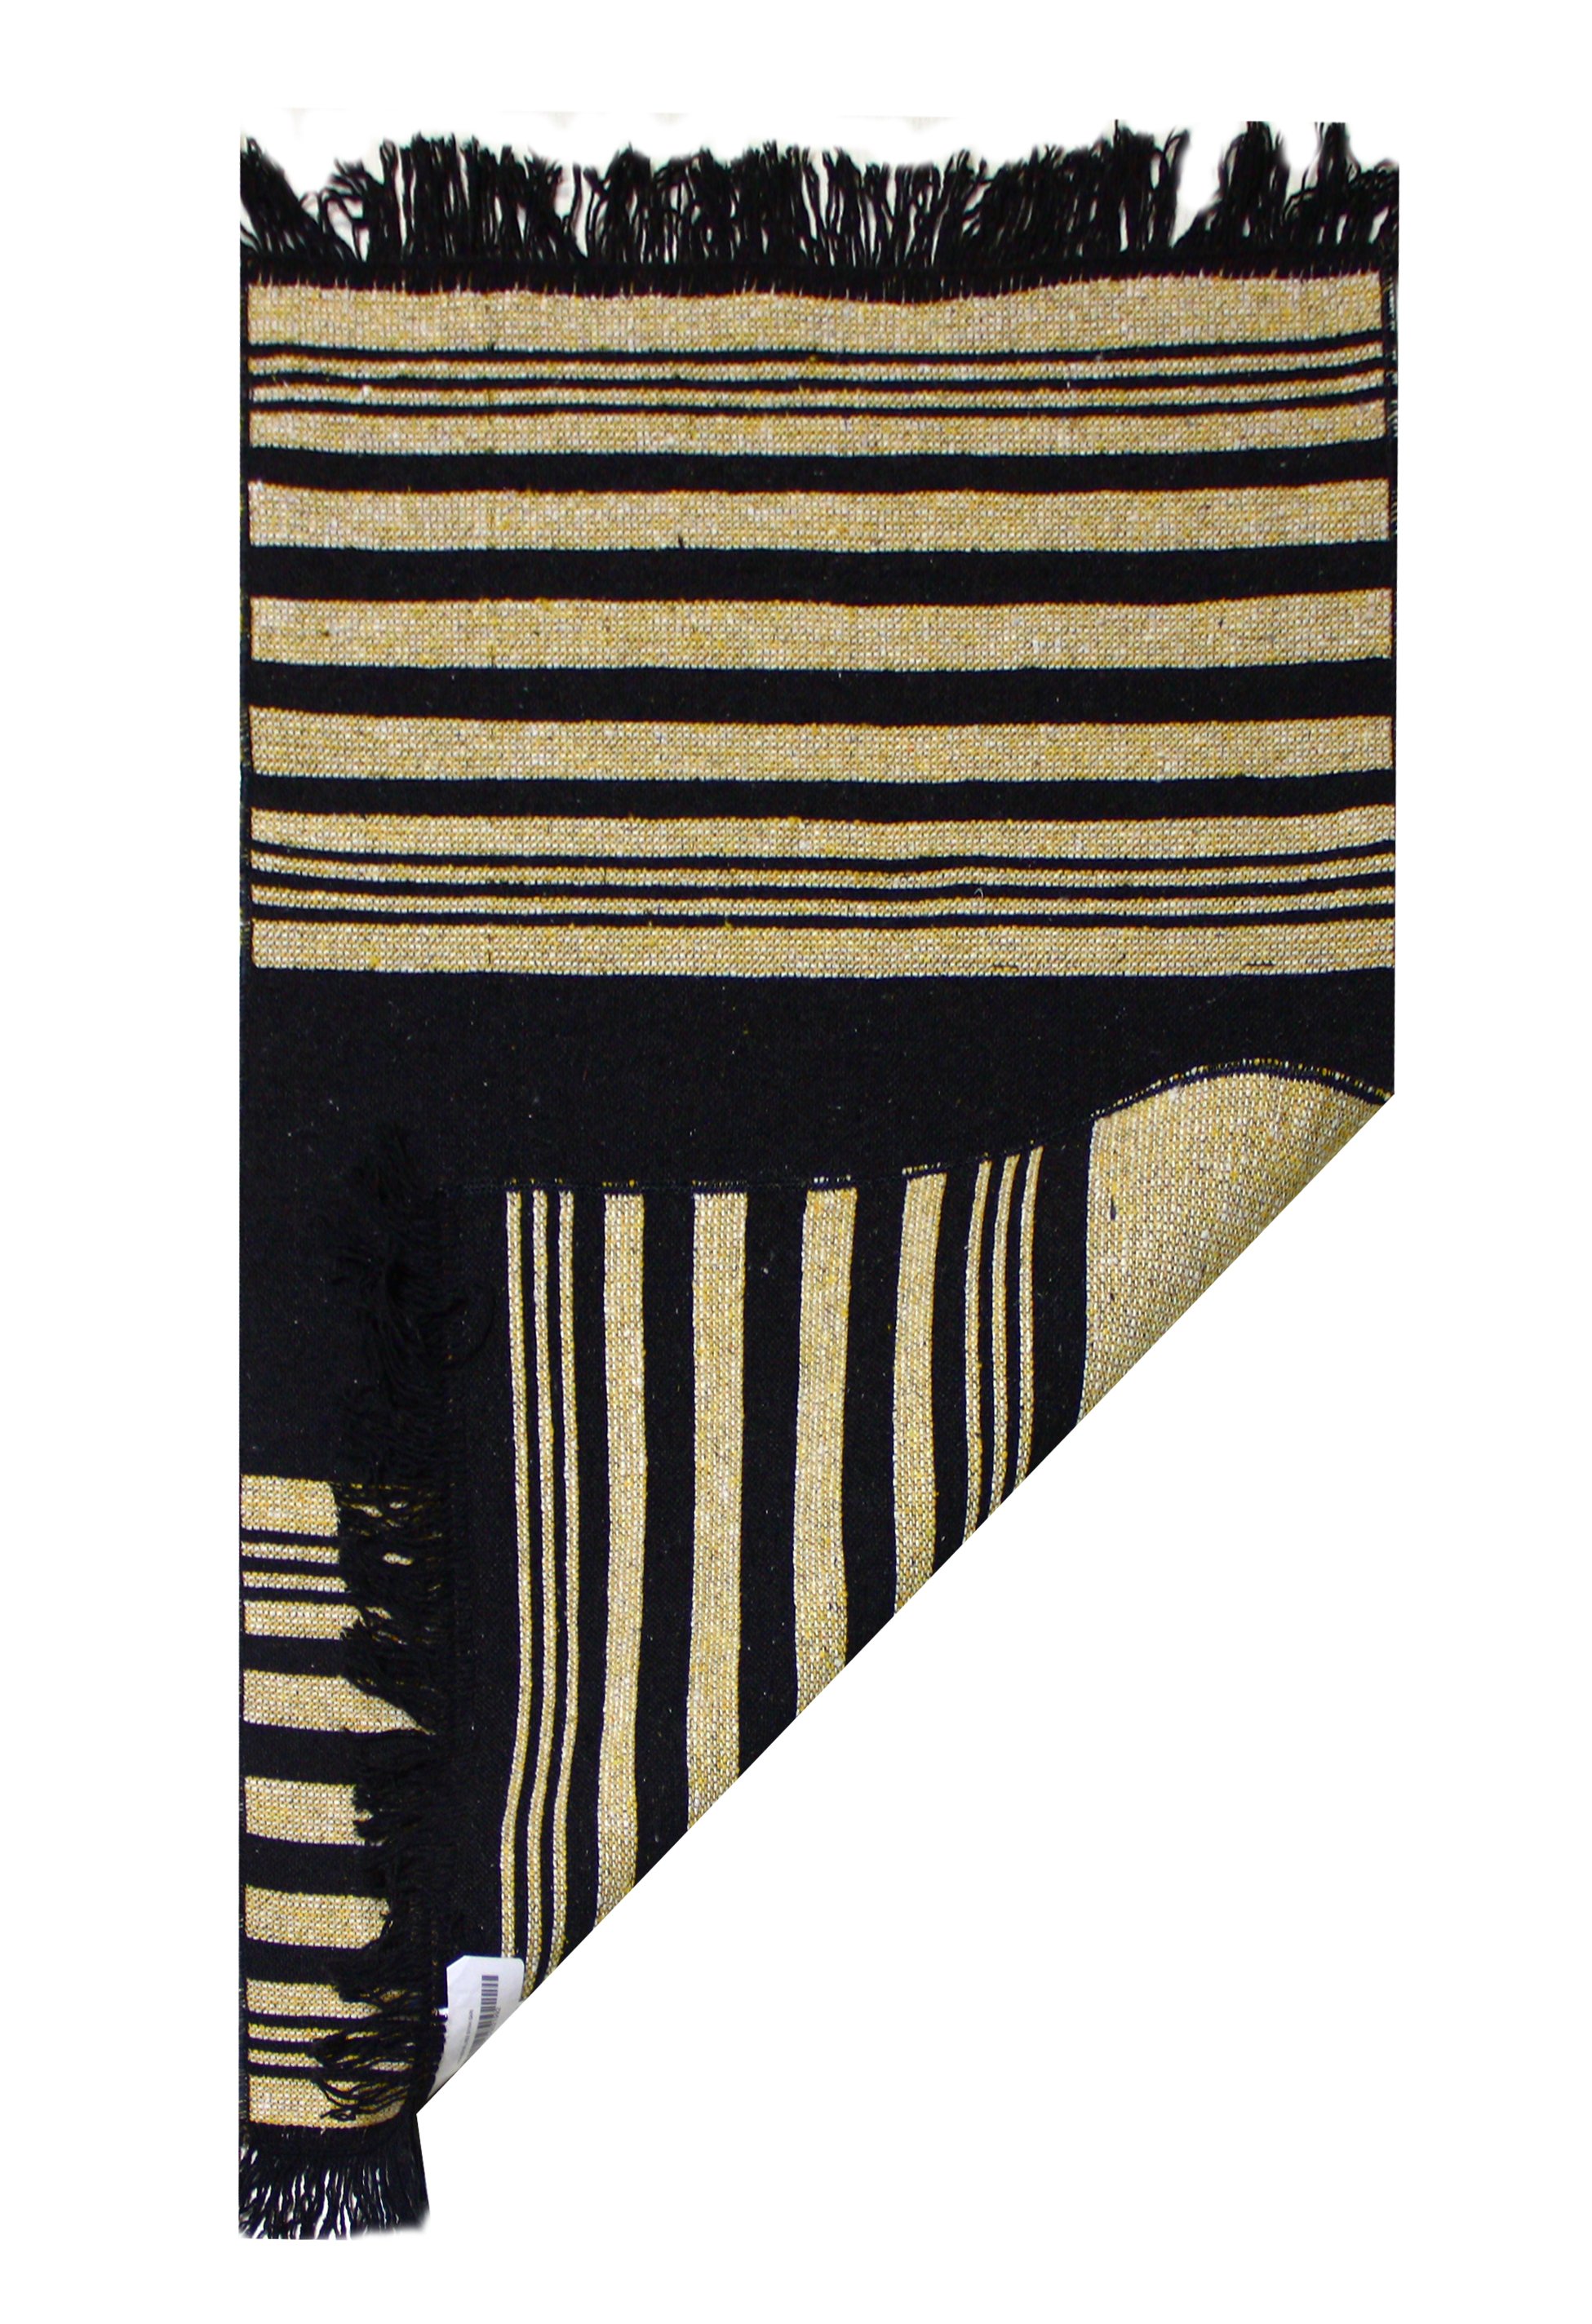 Ковер двусторонний IzziHome Lara Siyah Sari Lr02, 125х80 см, черный с желтым (2200000552372) - фото 3